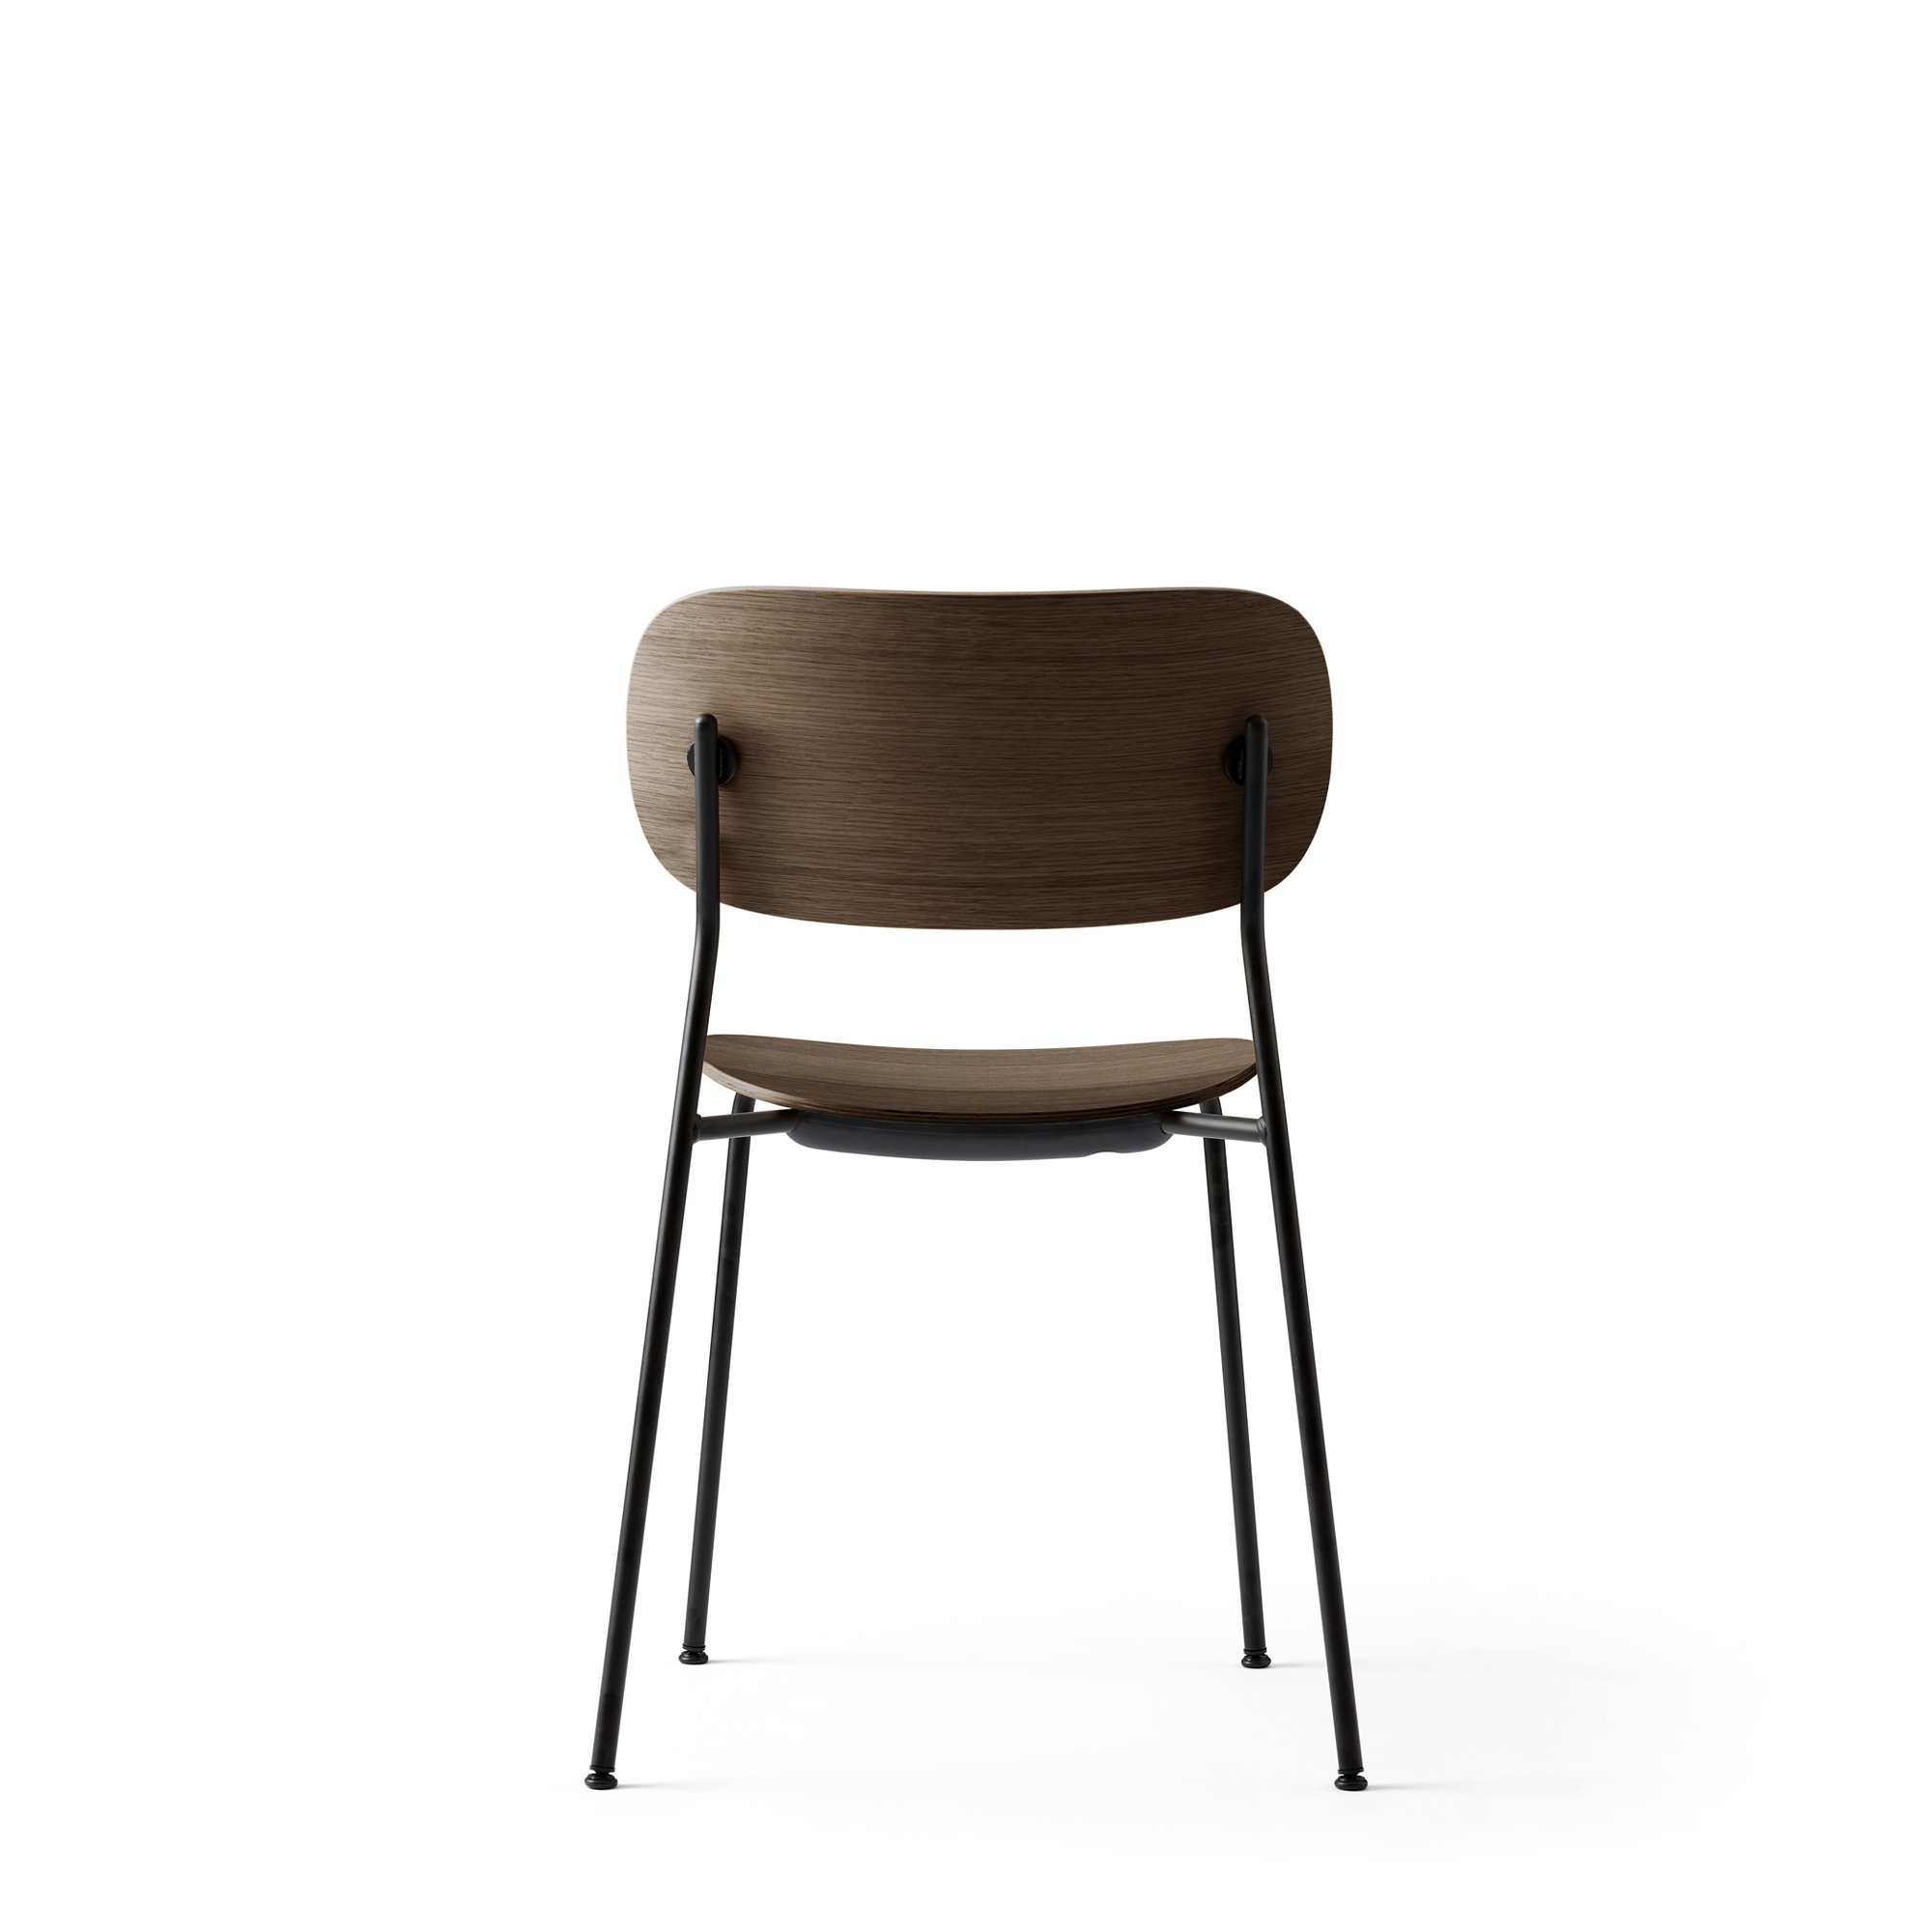 Co Chair brunproduktzoombild #2